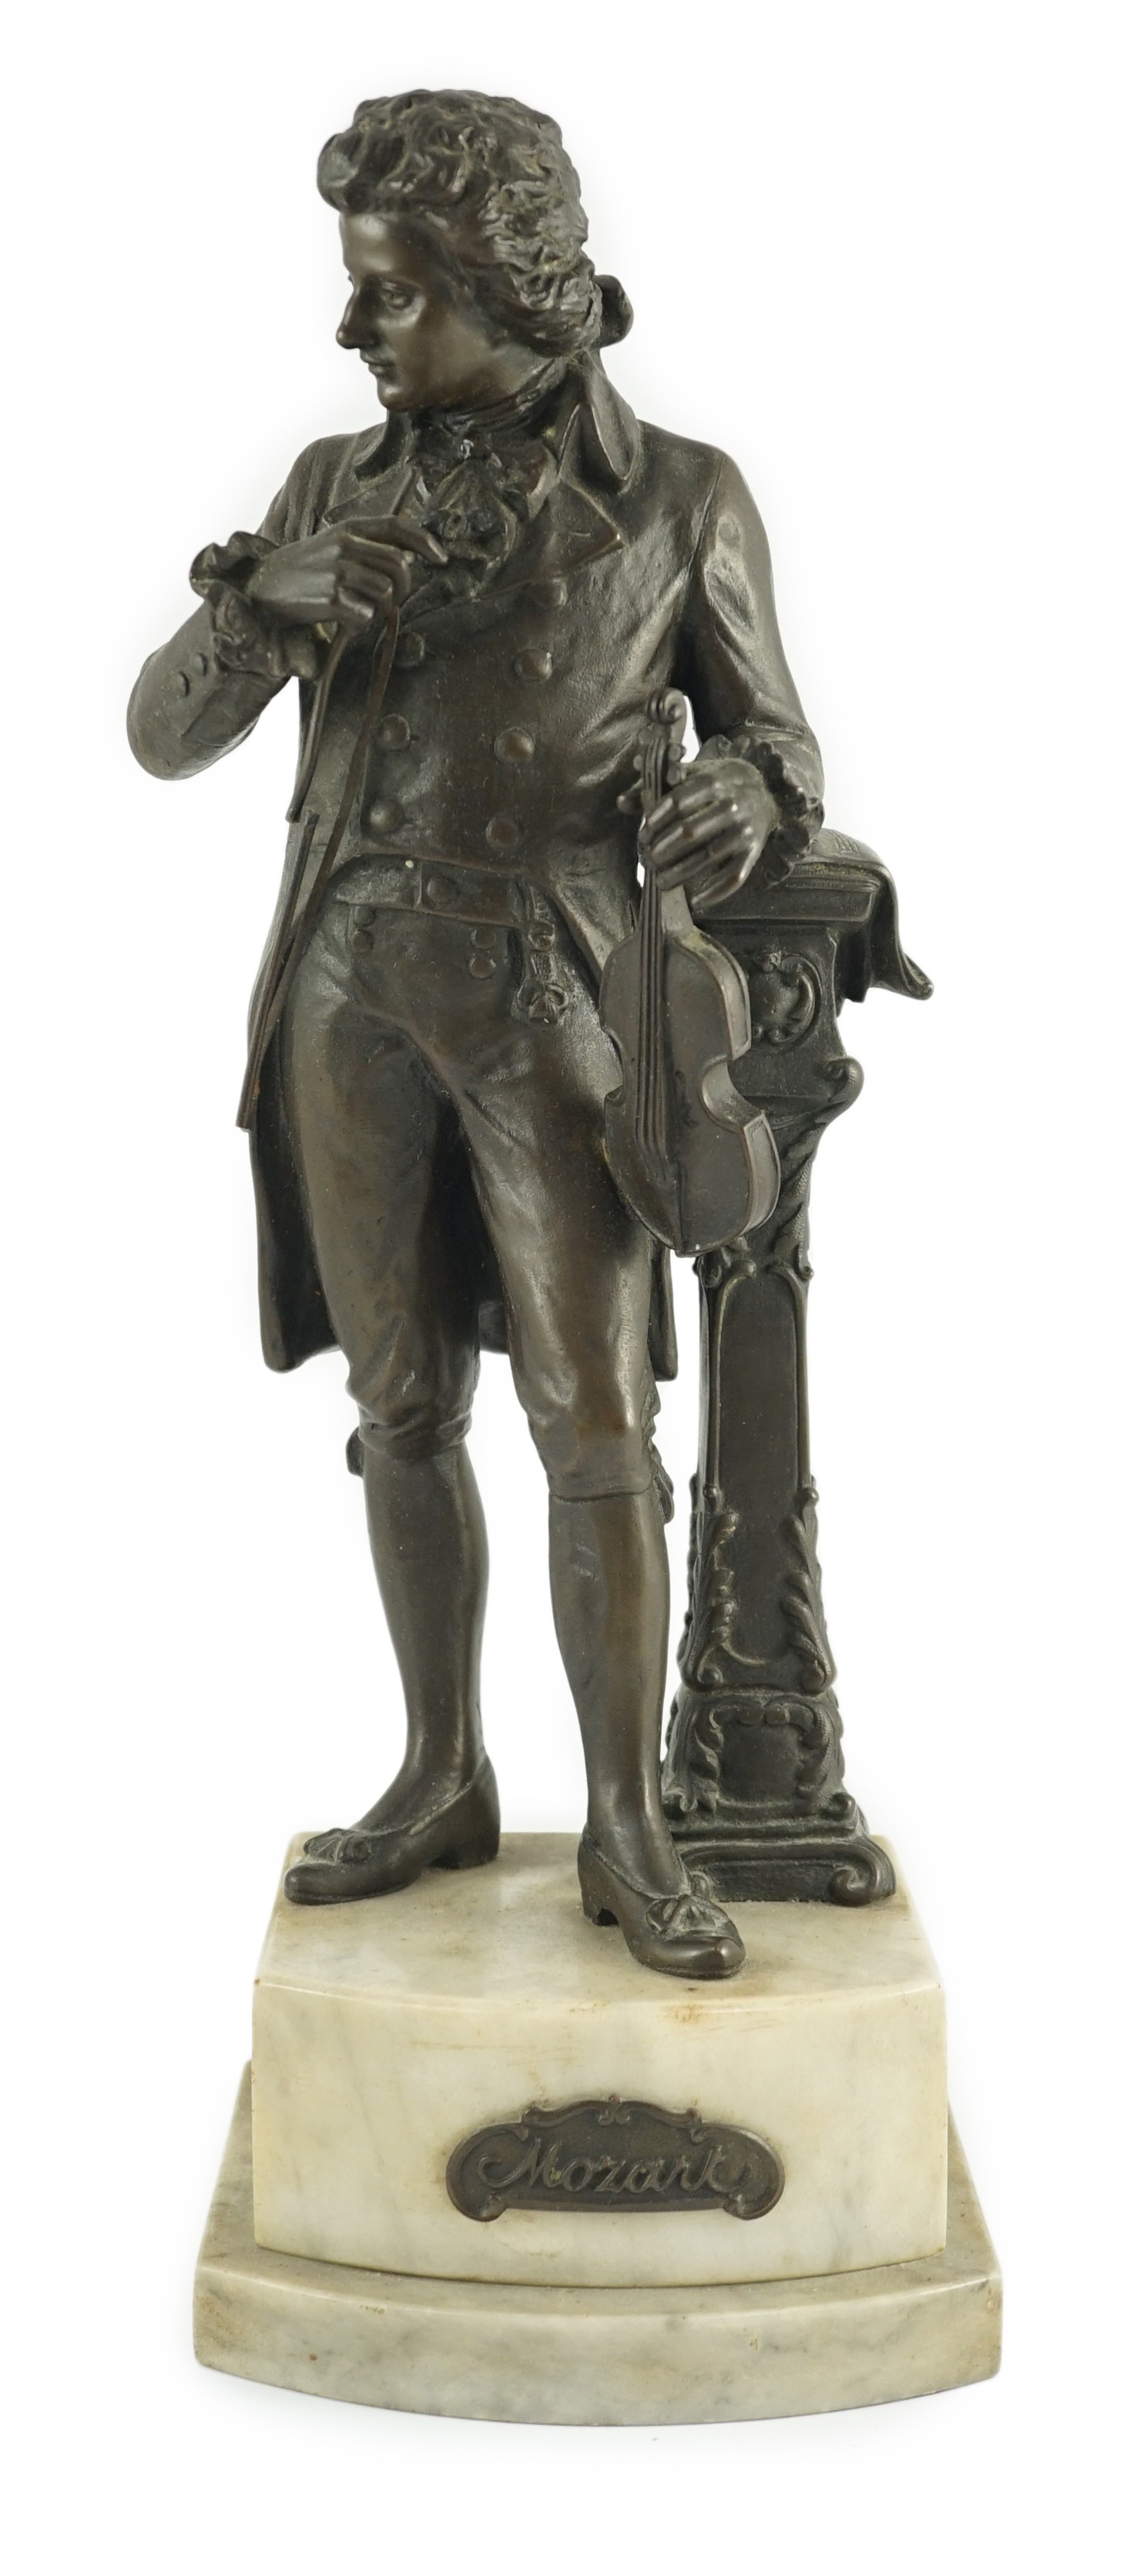 Carl Brose (German, 1880-). An early 20th century bronze figure of Mozart holding a violin, 41cm high                                                                                                                       